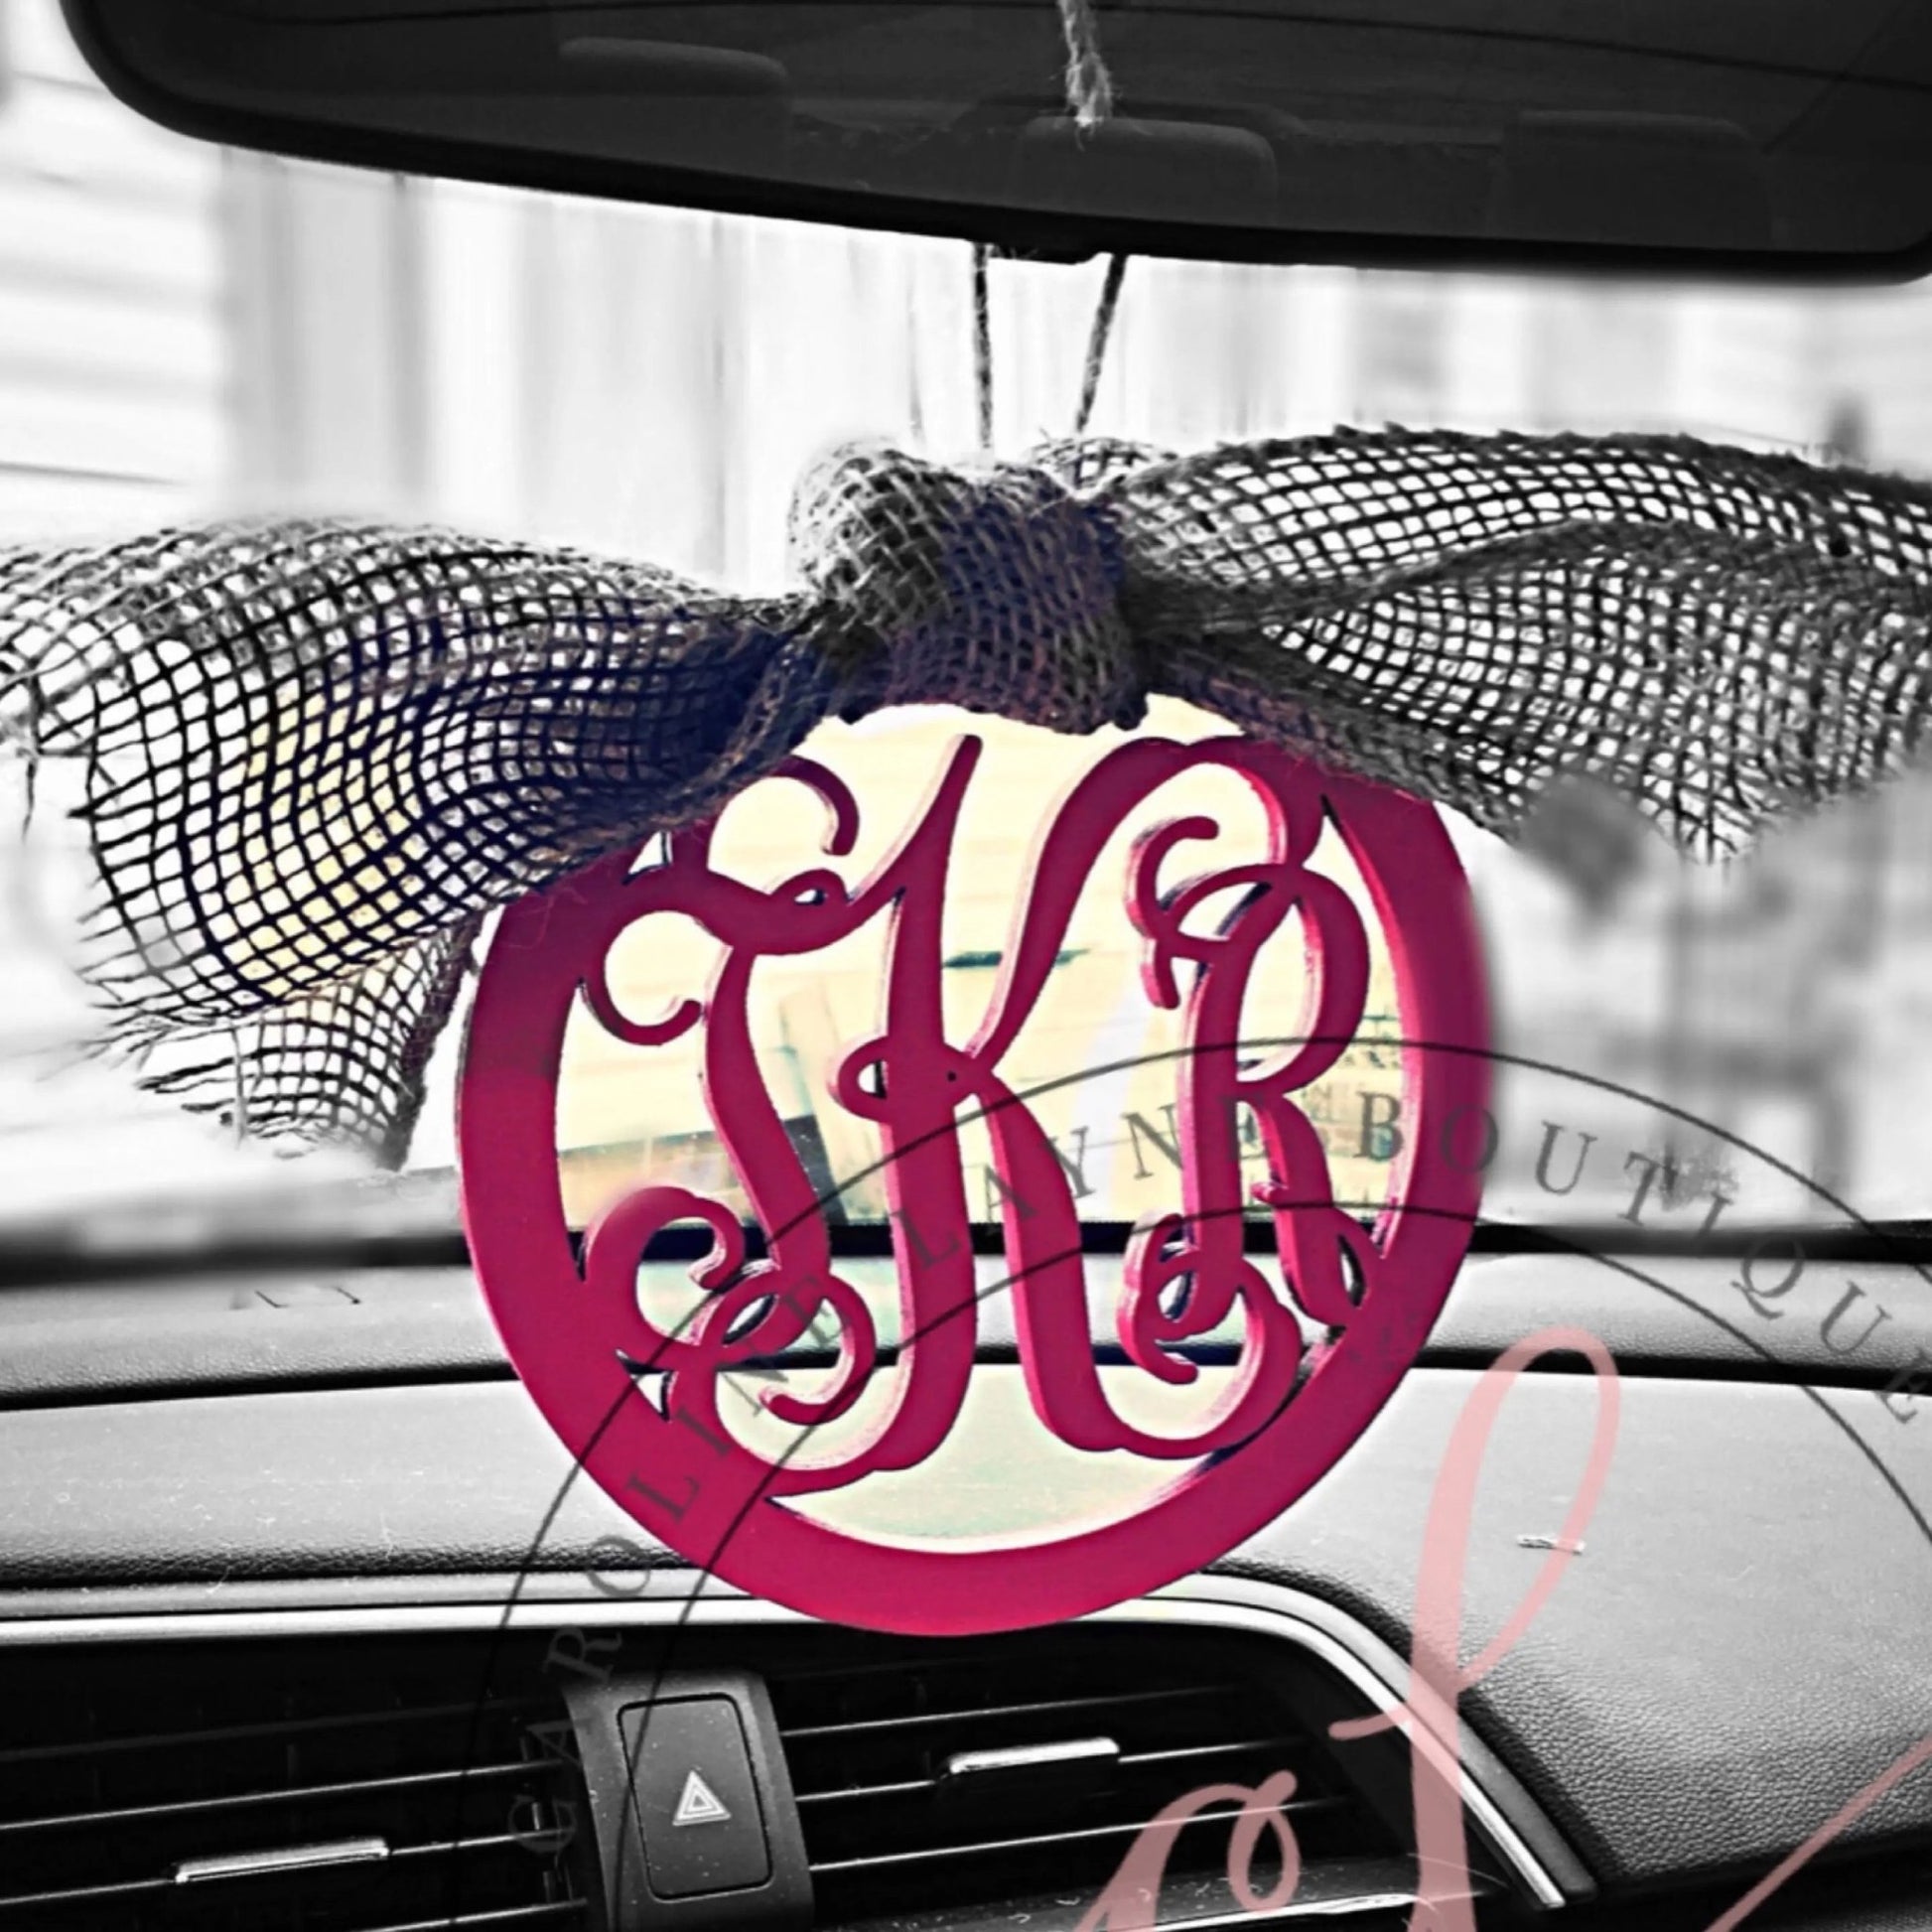 Car rear view mirror monogram - Caroline Layne Boutique LLC